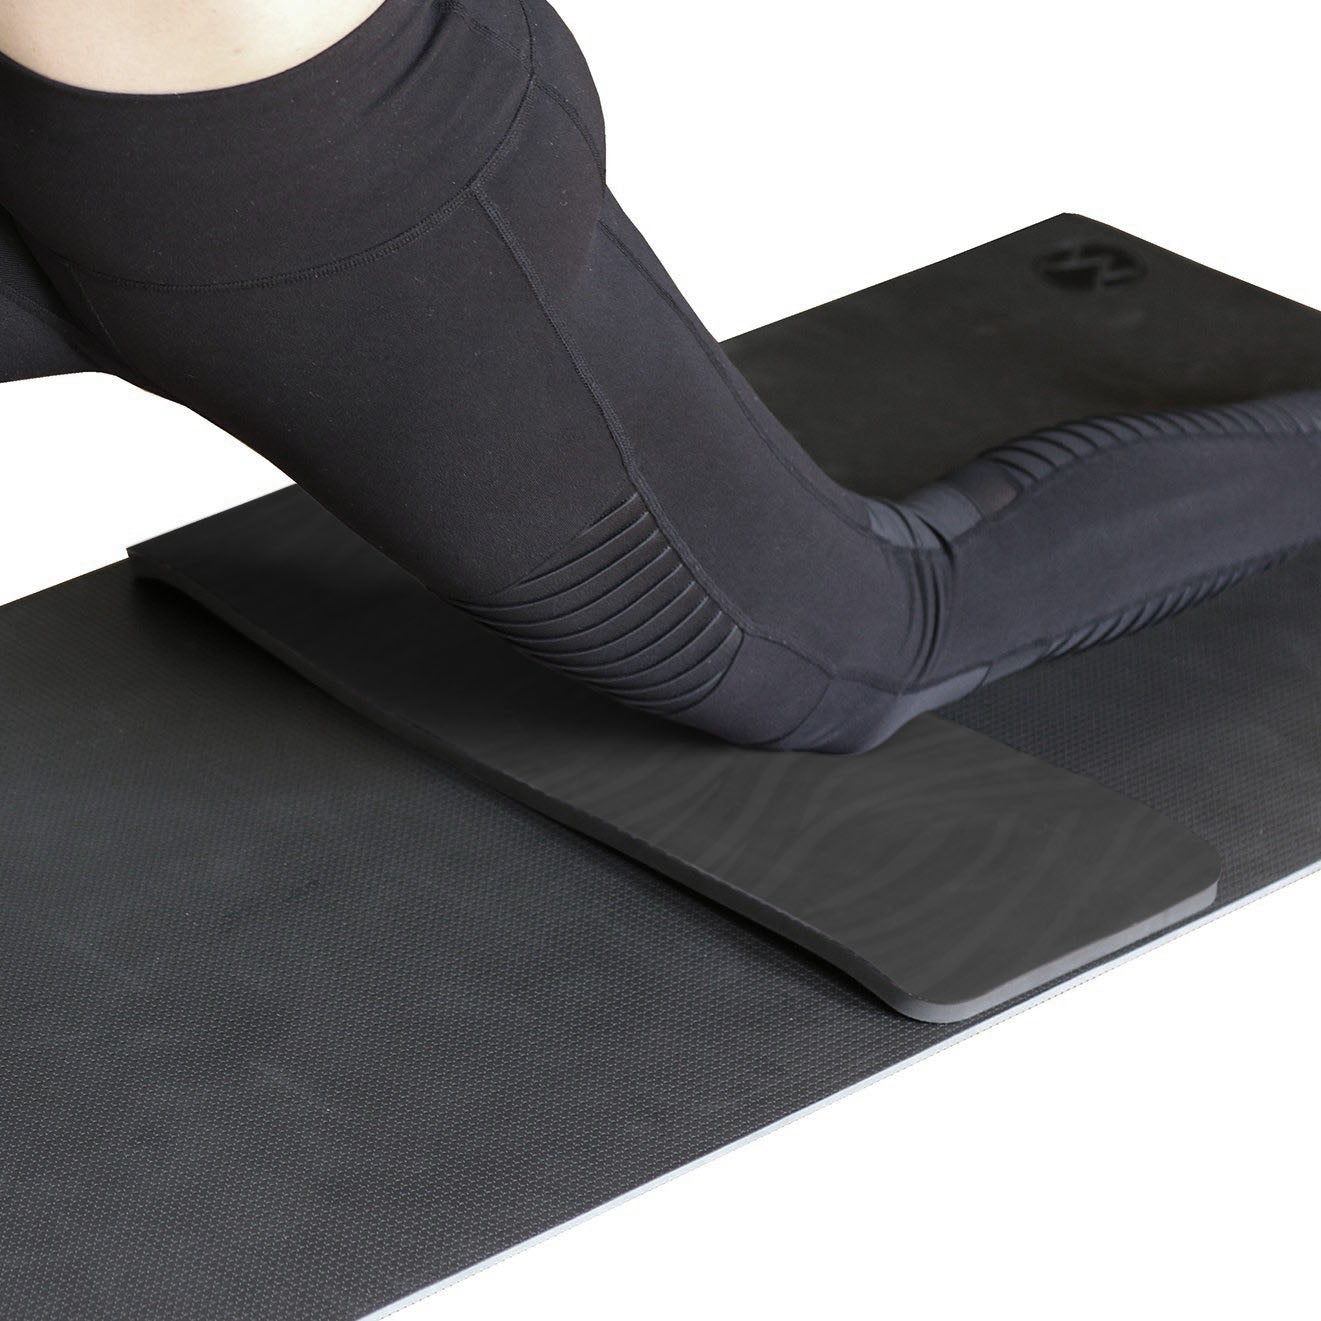 Yoga Paws Elite Size 1 Yoga Mat You Wear - Black FREE SHIPPING!